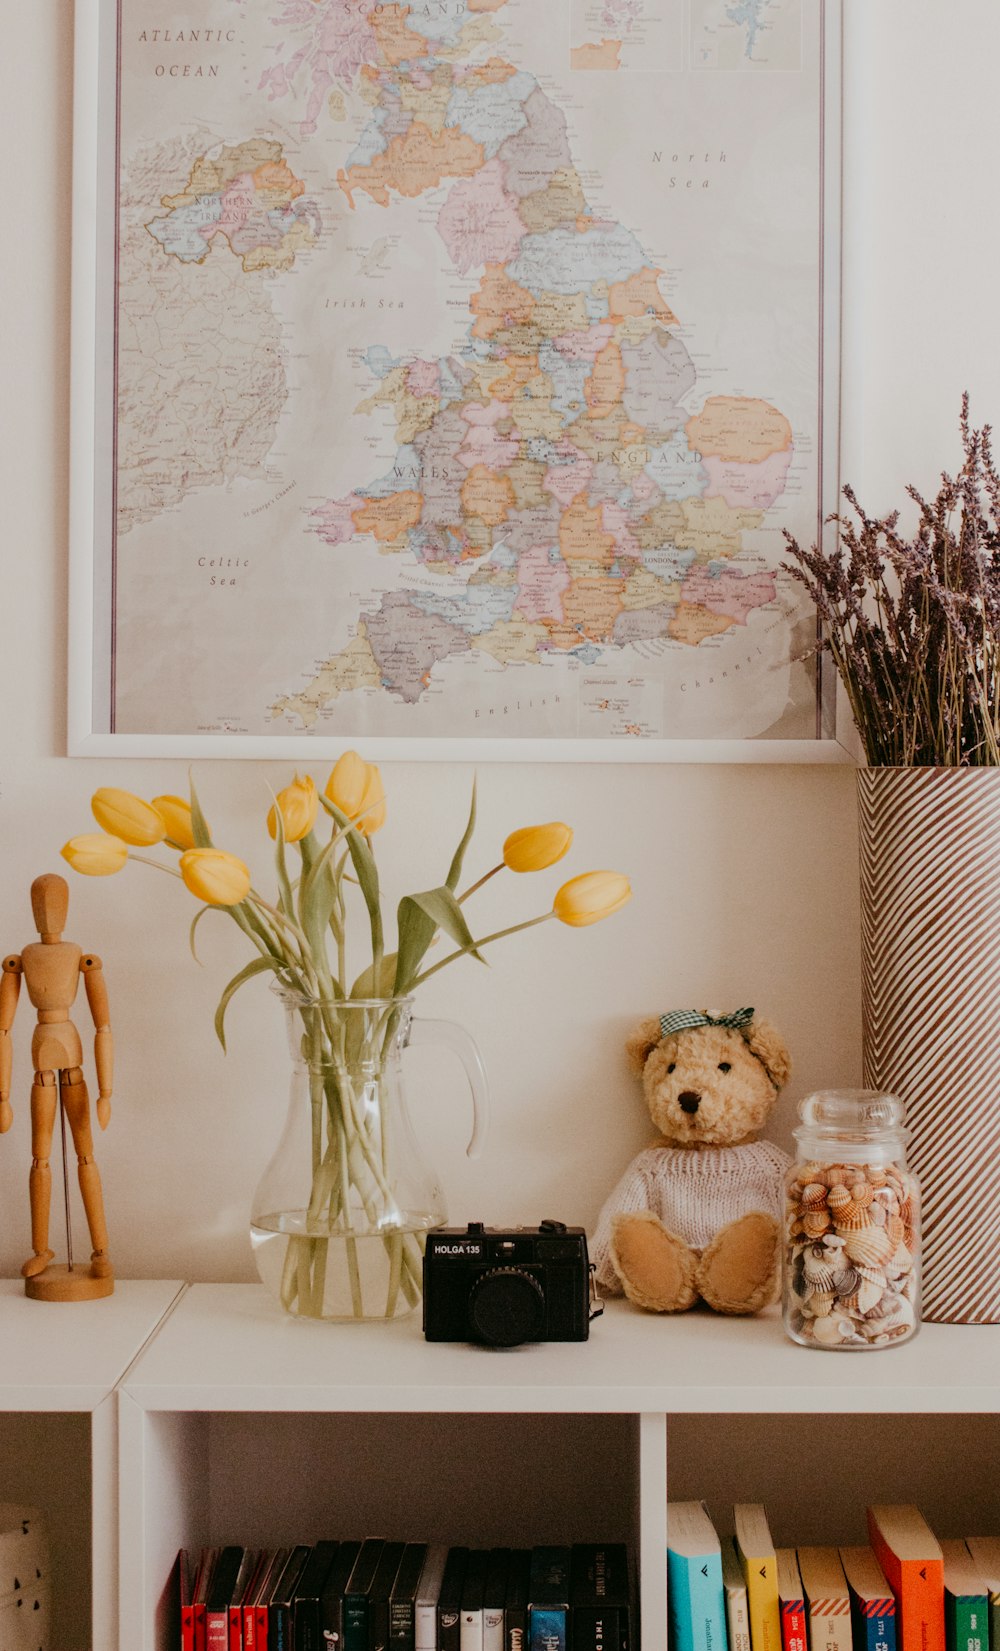 a vase with flowers and a teddy bear on a shelf